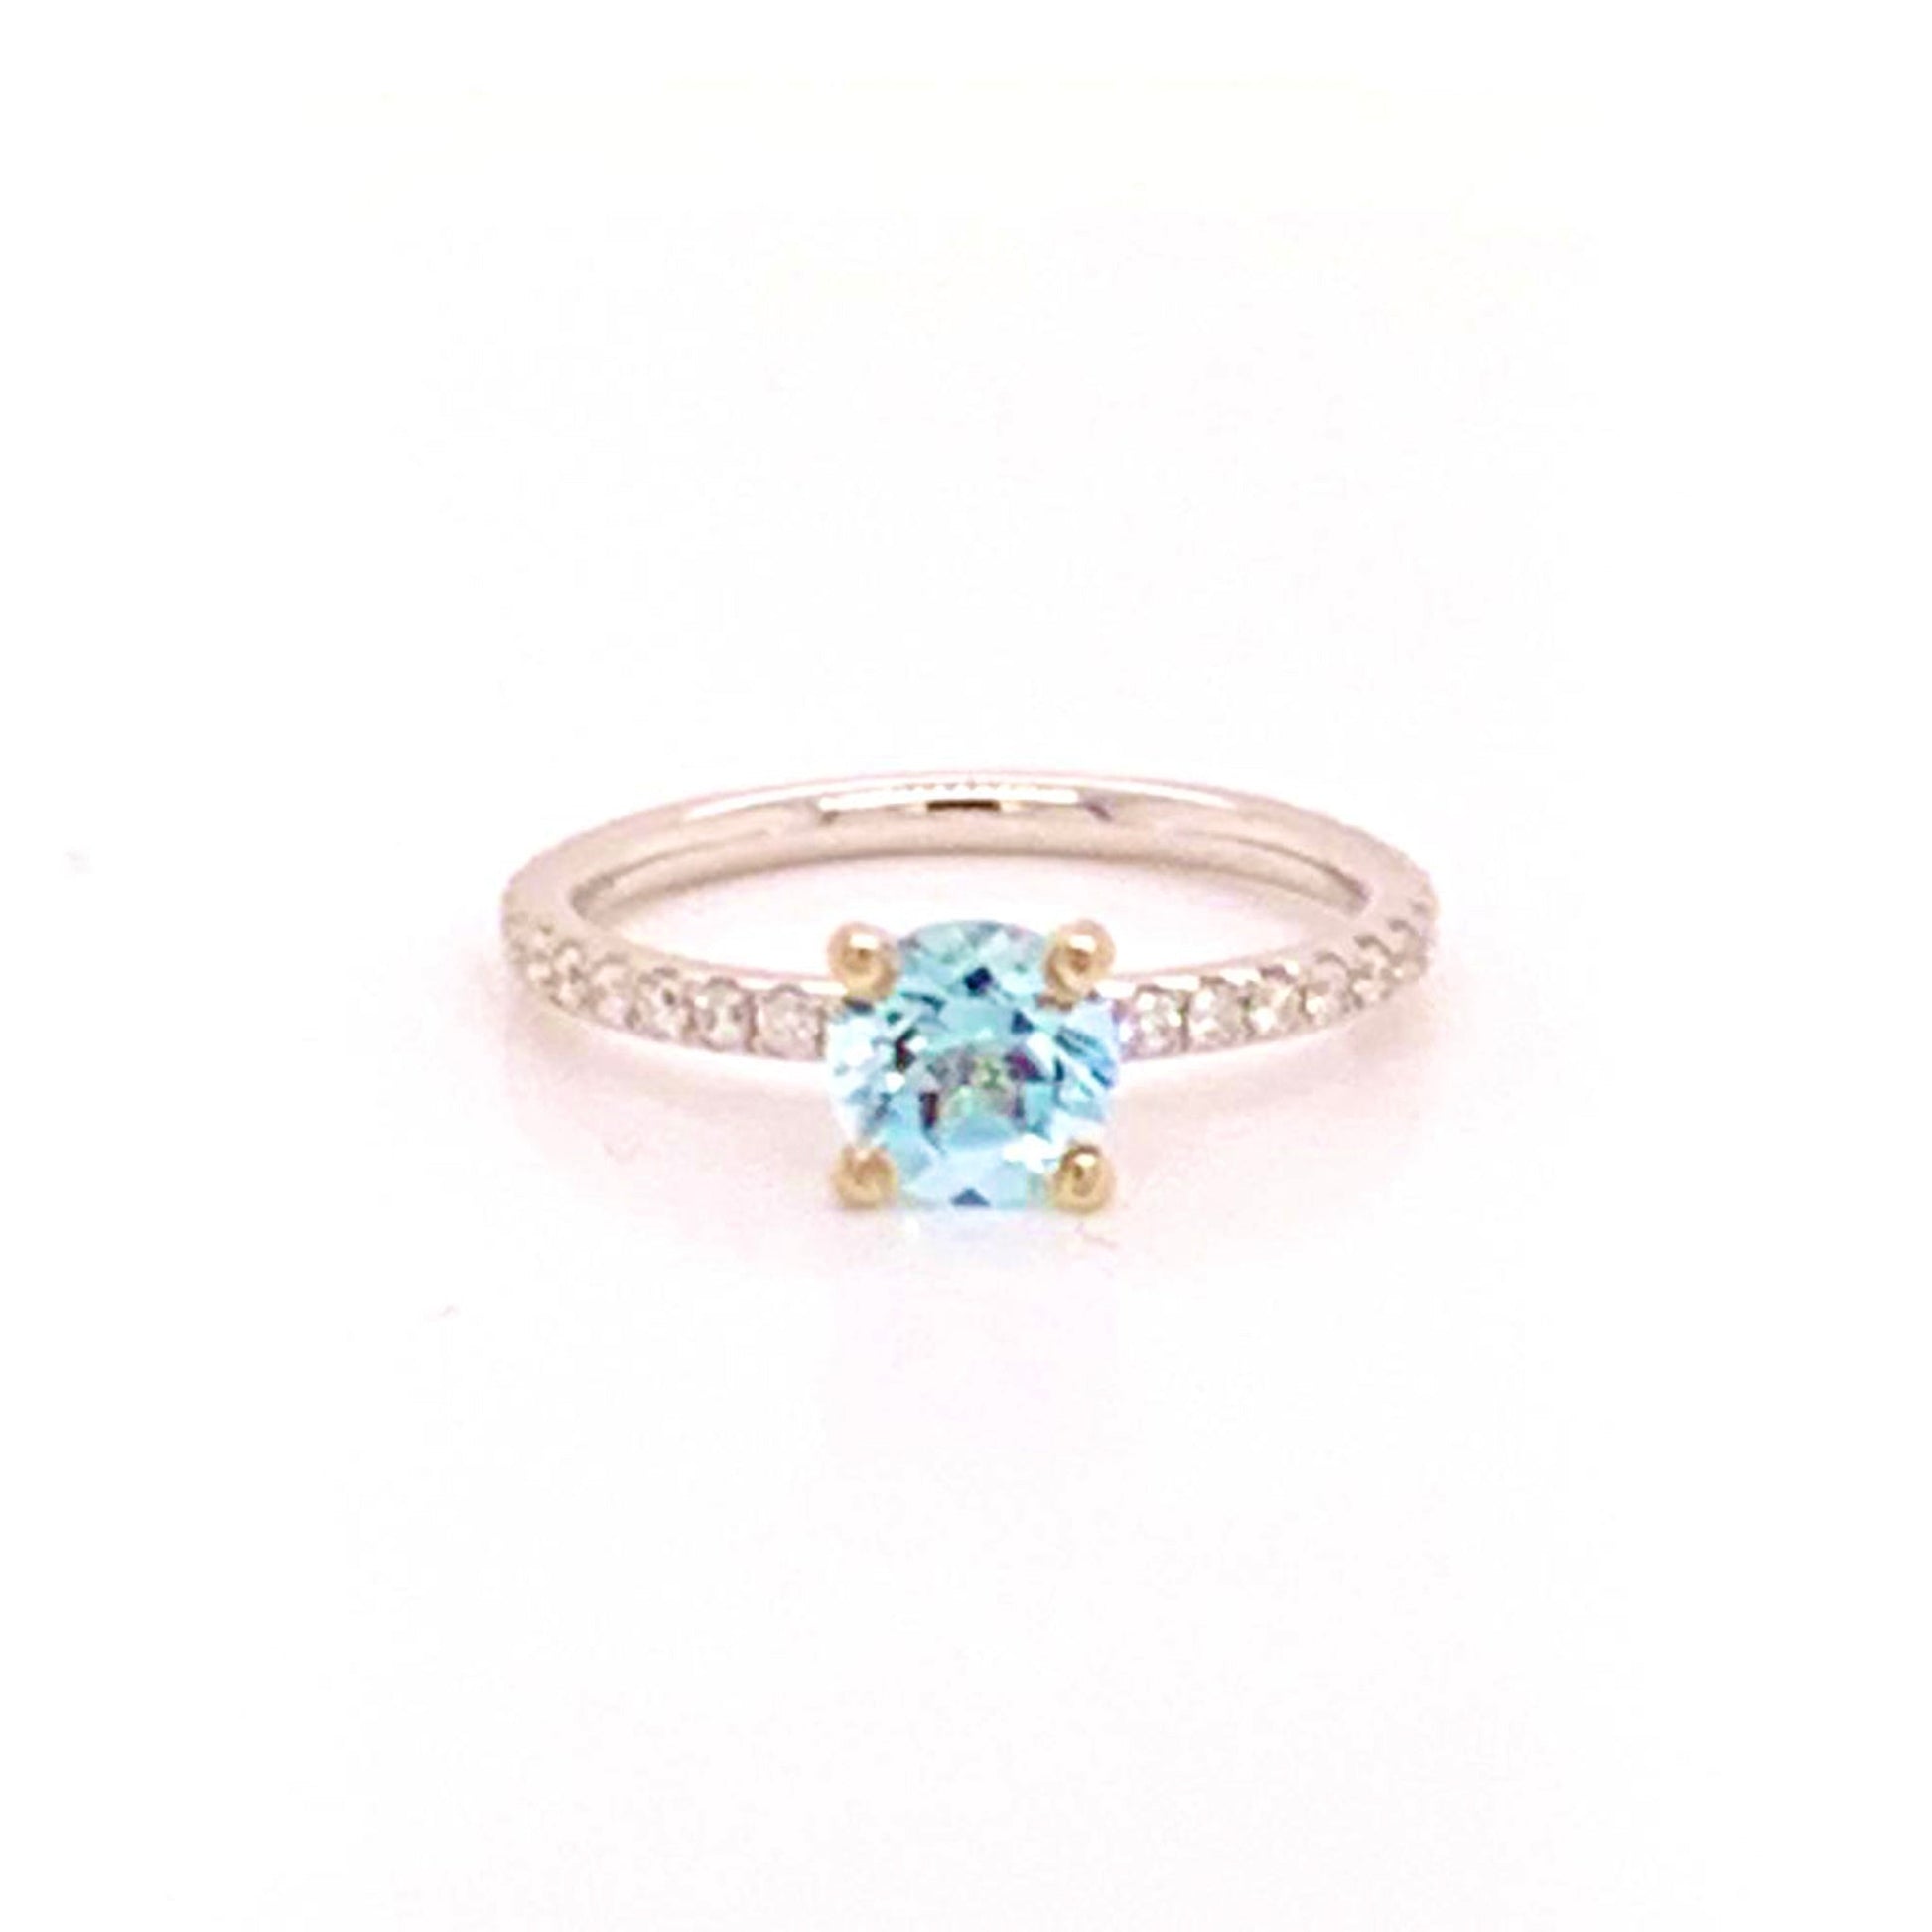 Diamond Aquamarine Ring 18k Gold 1.08 TCW Certified $1,800 822592 - Certified Fine Jewelry